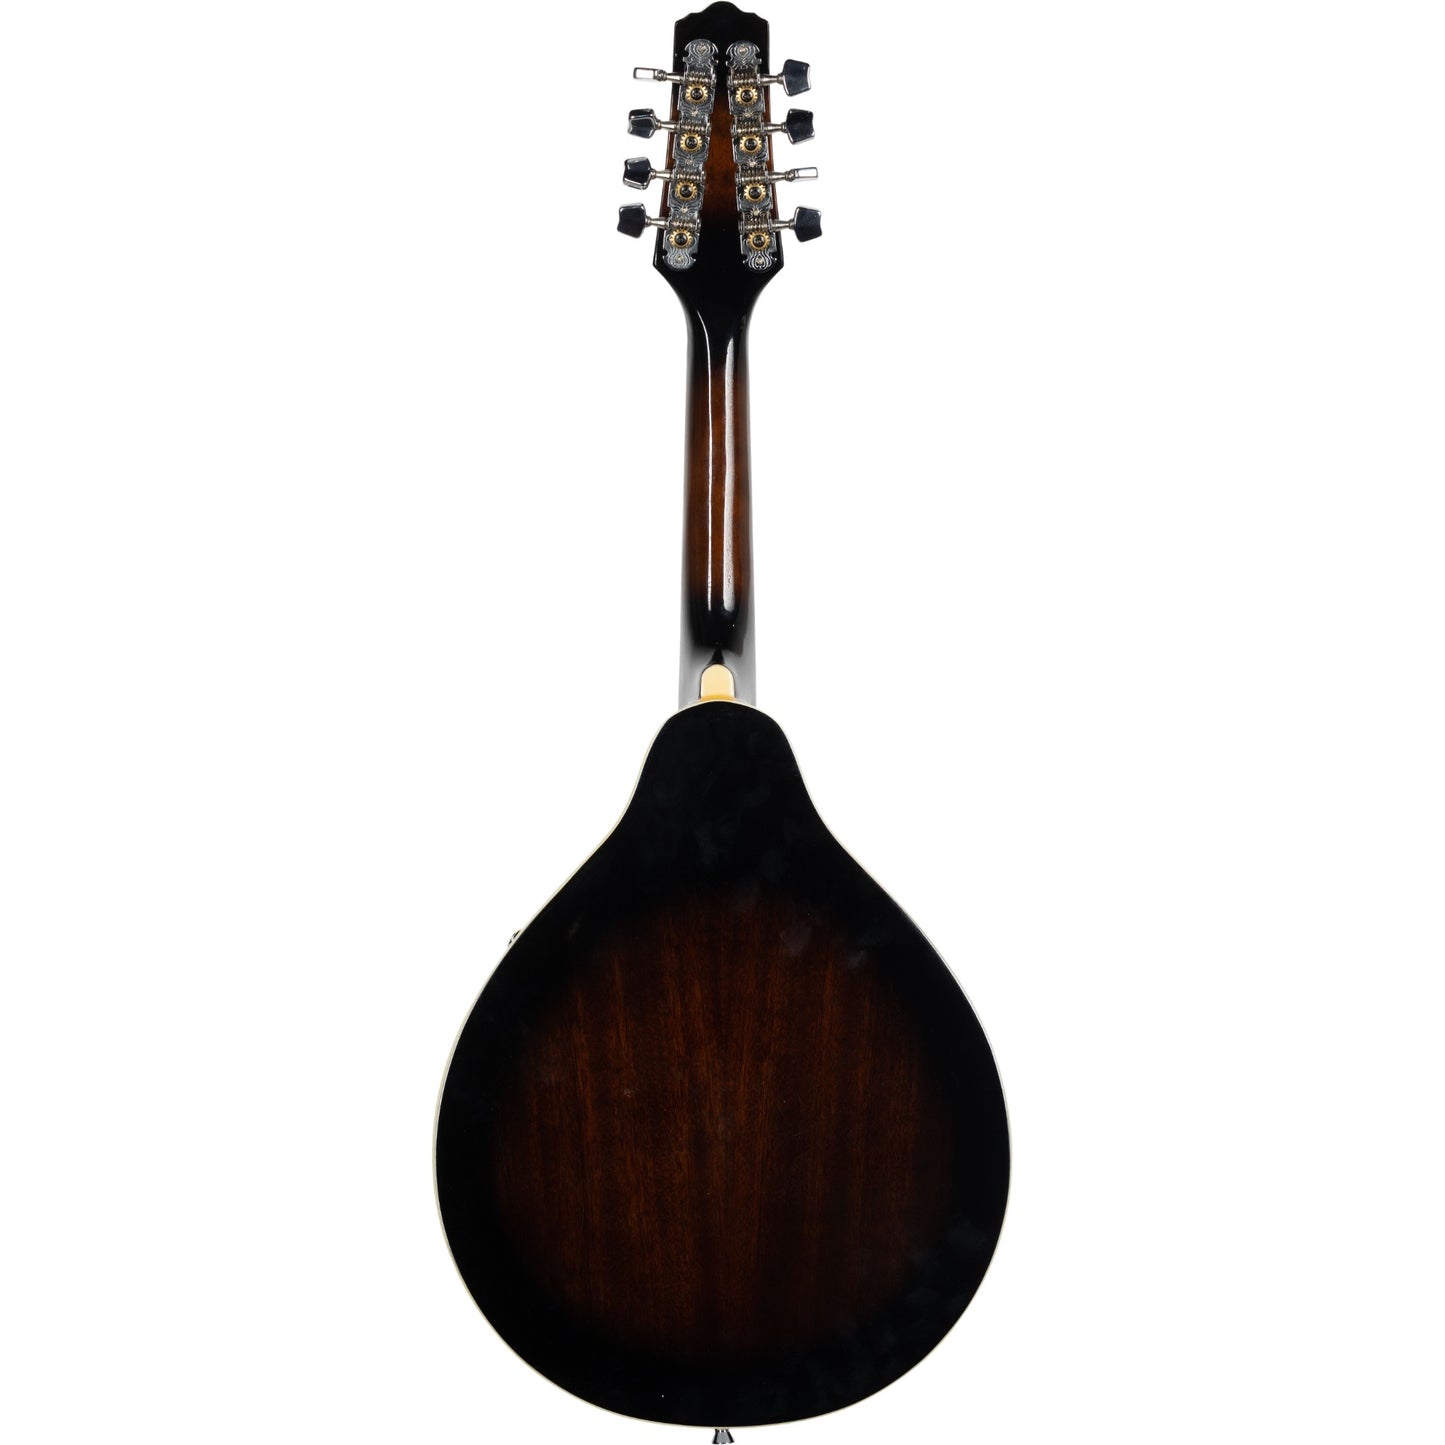 Ibanez M510DVS A-Style Mandolin, Dark Violin Sunburst